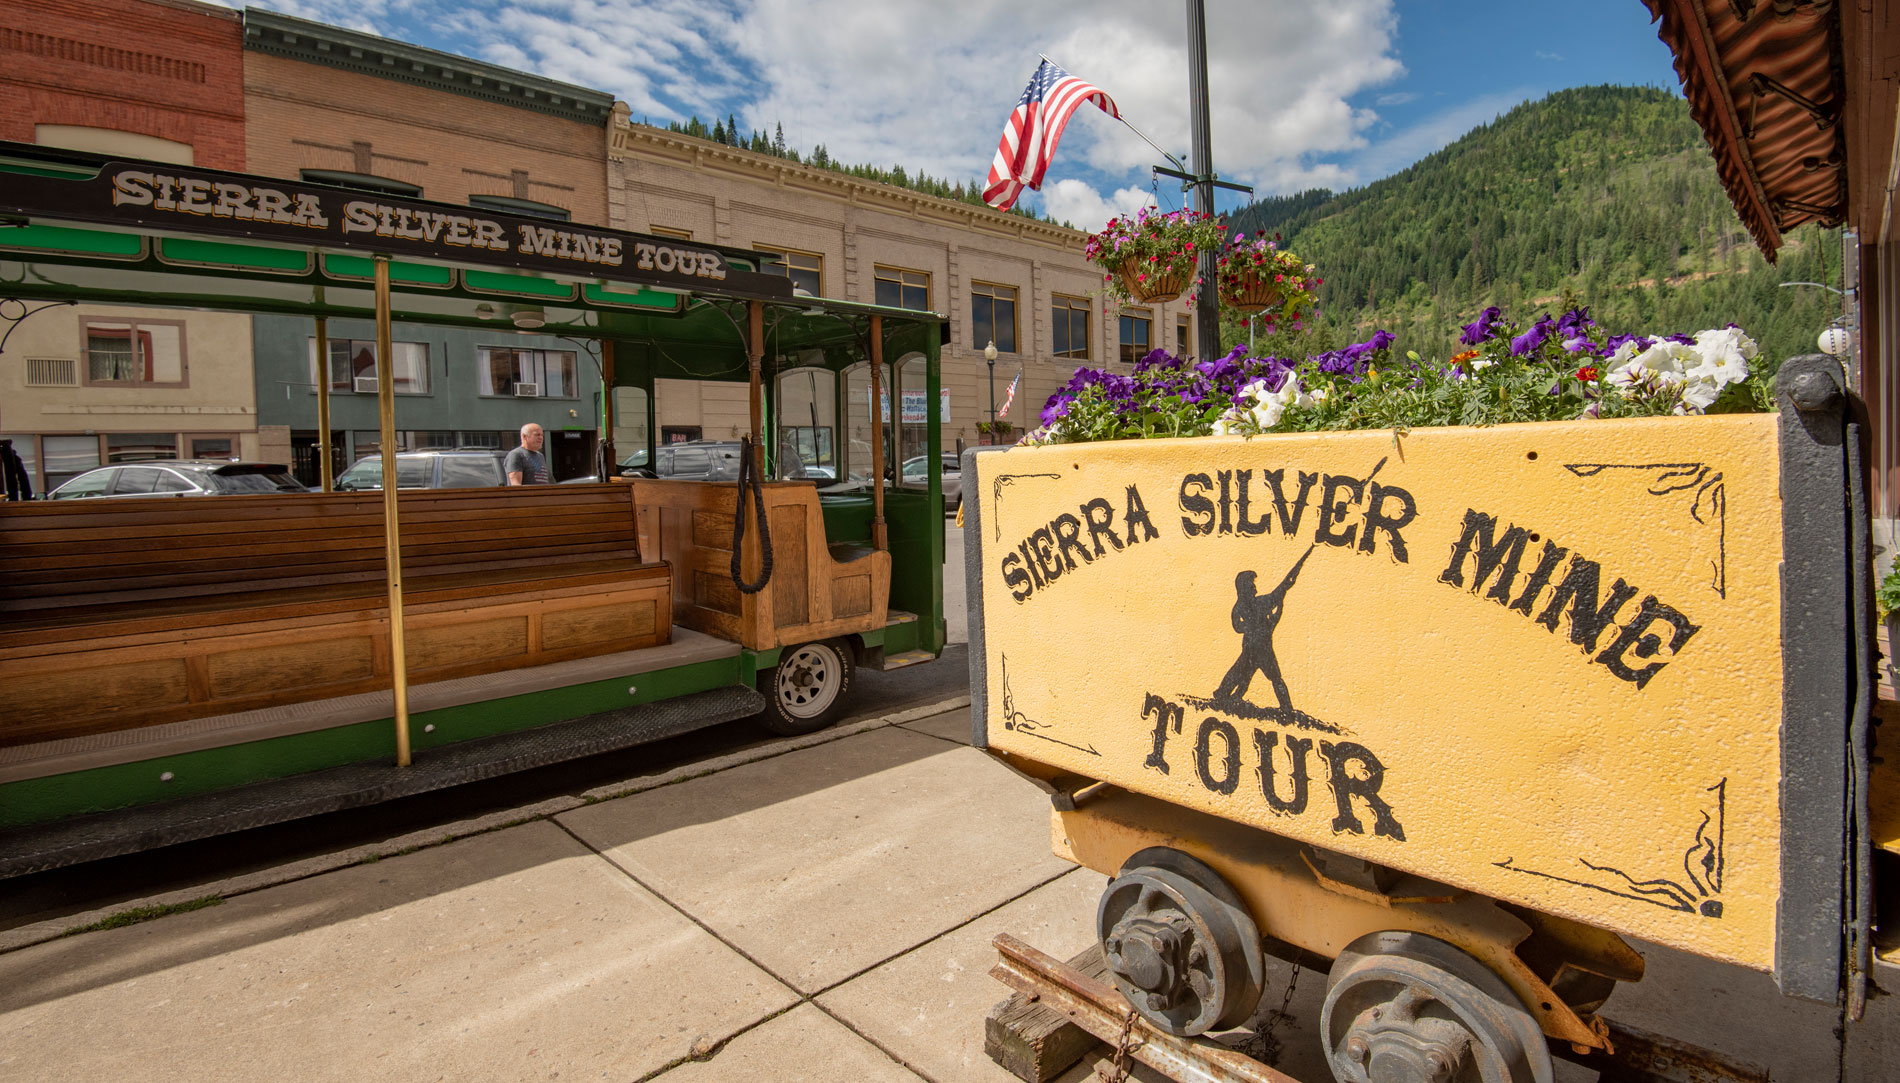 The Sierra Silver Mine Tour in Wallace, Idaho